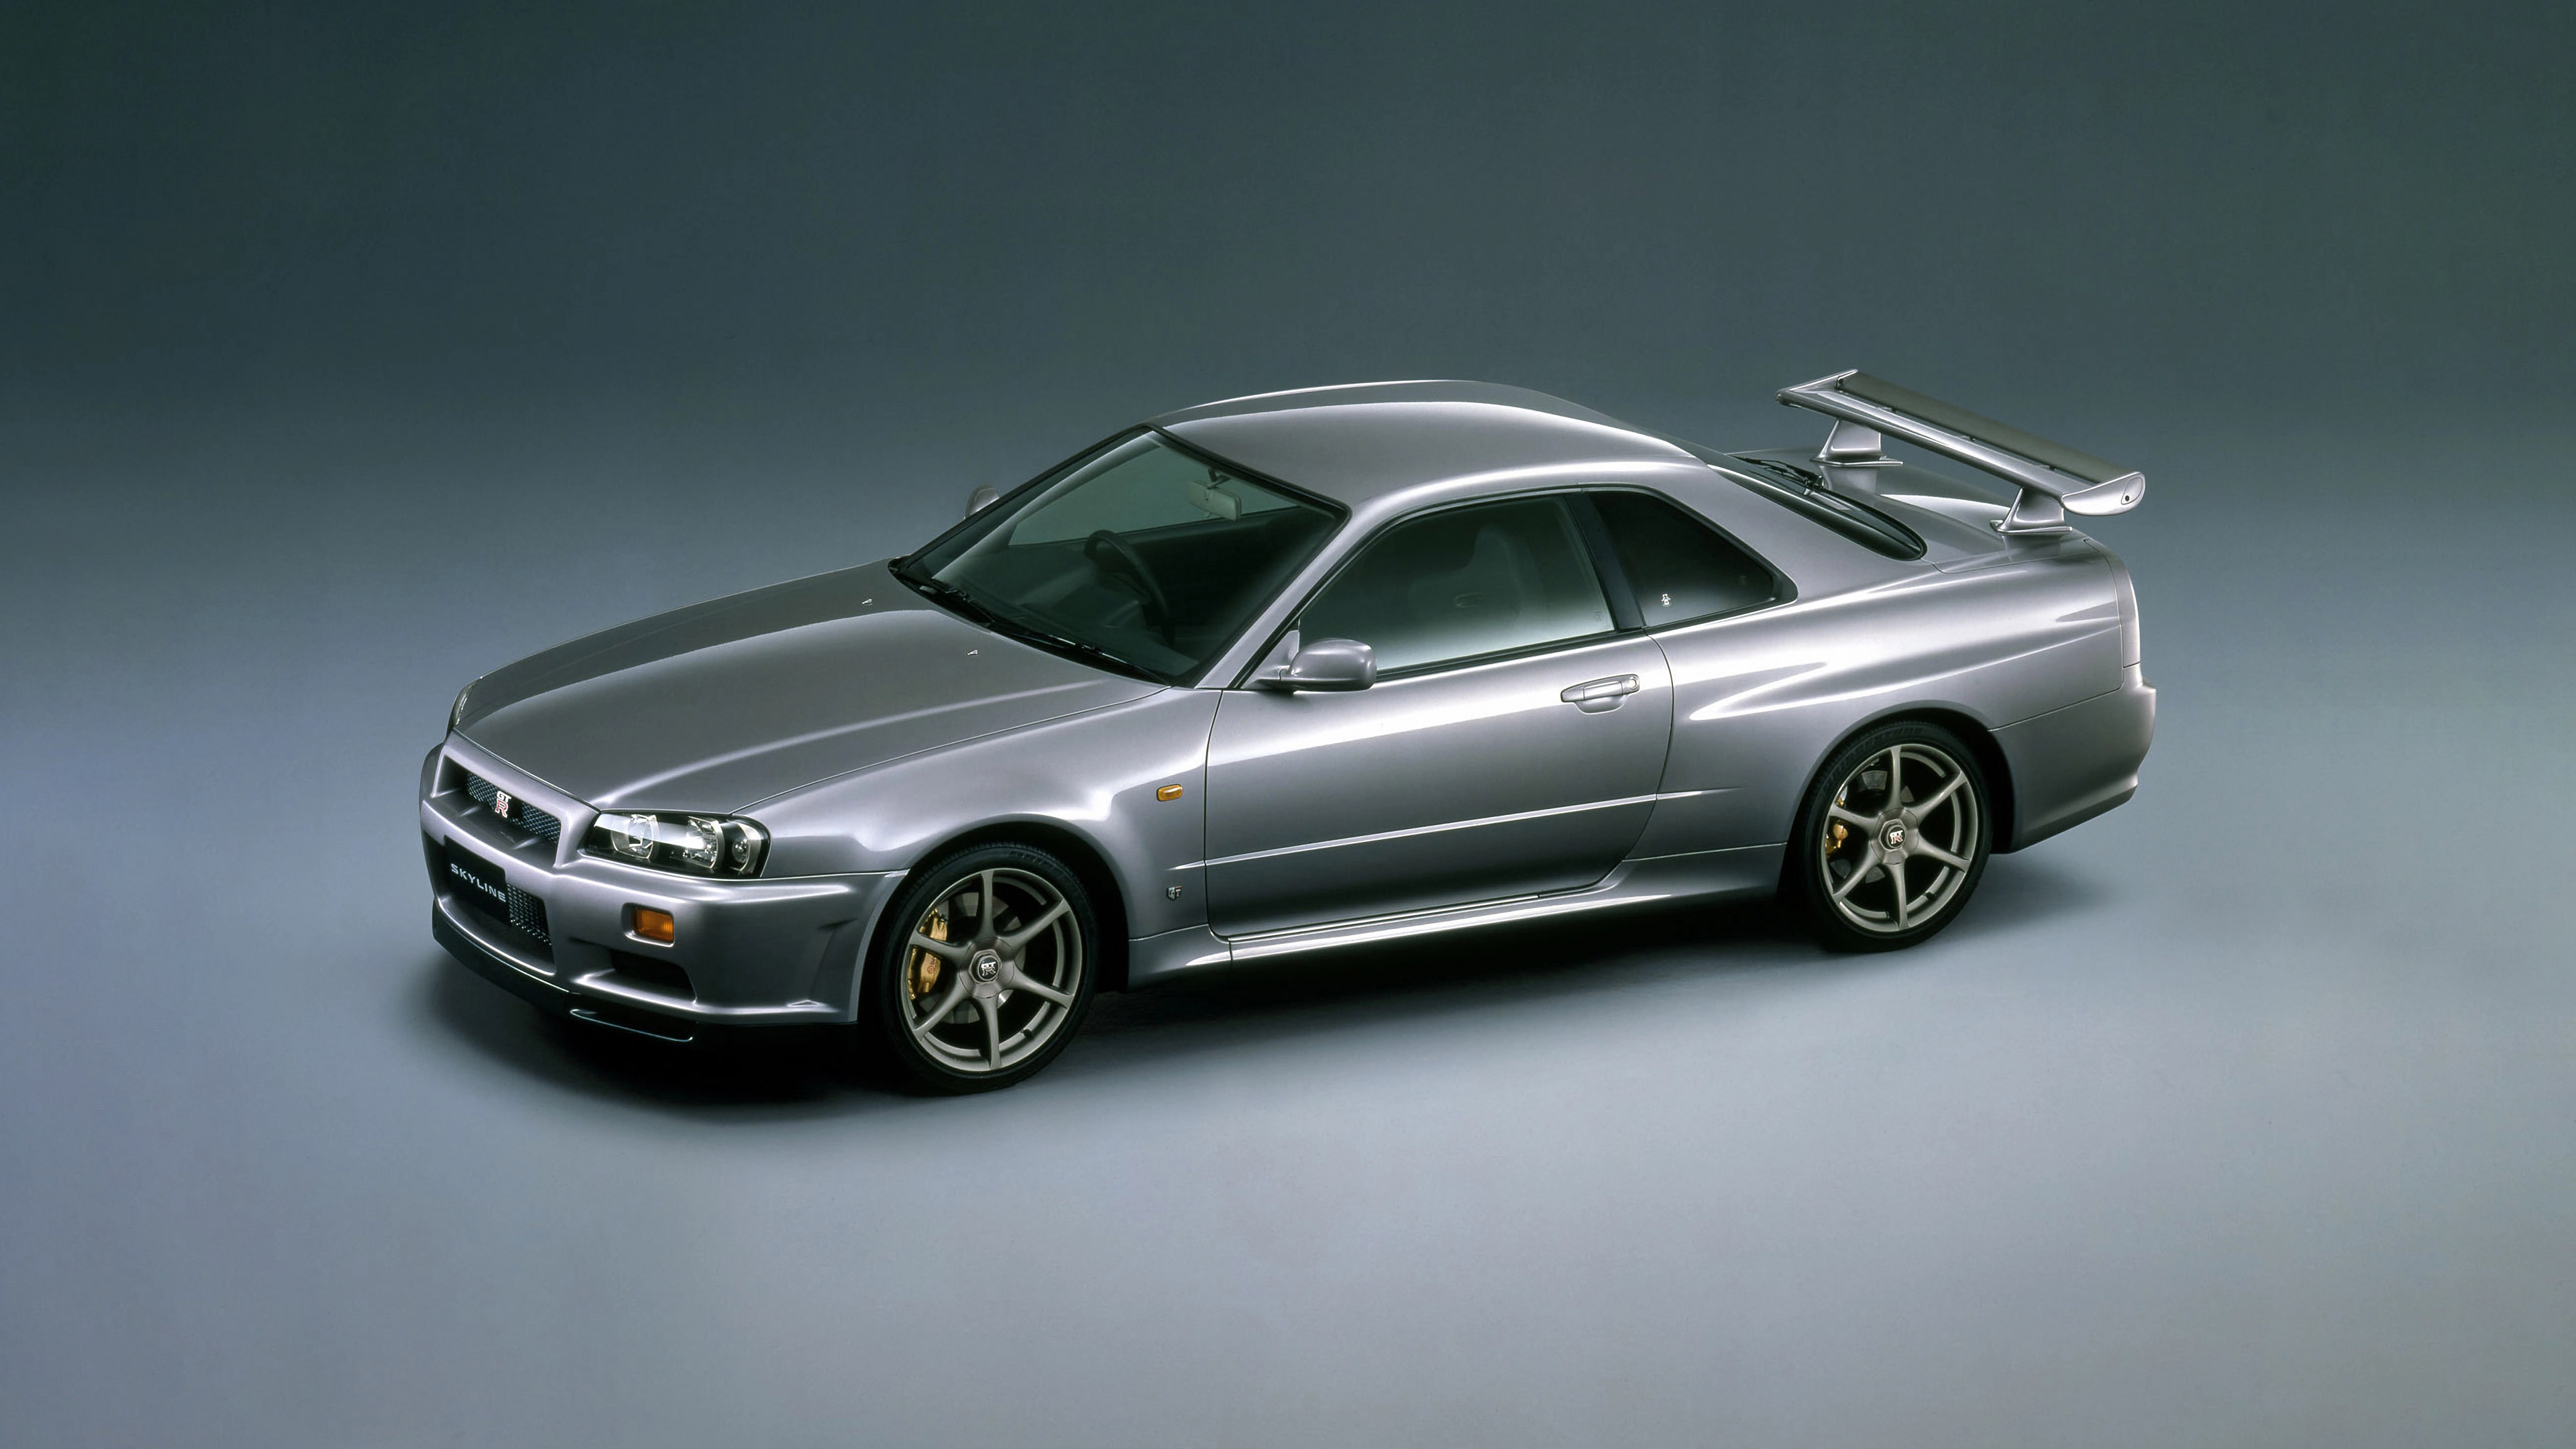  1999 Nissan Skyline GT-R Wallpaper.